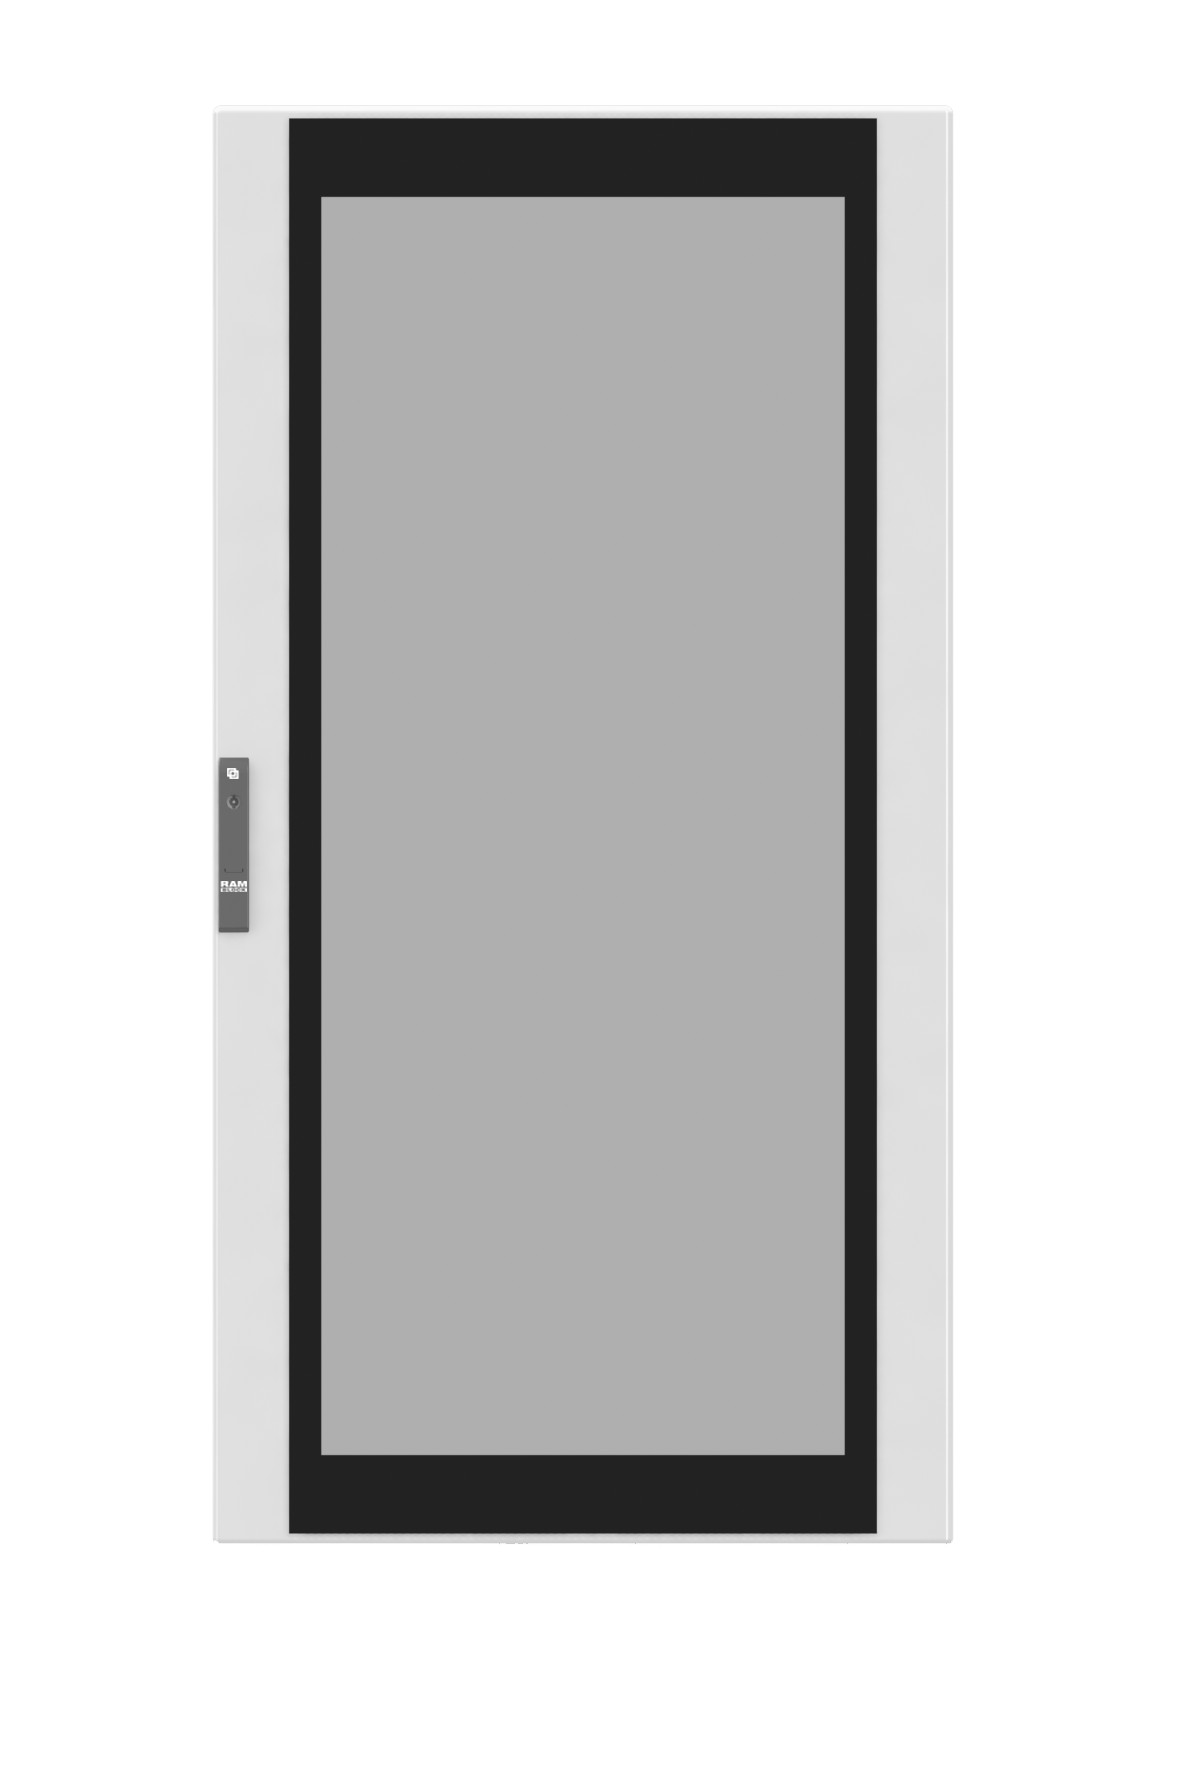 R5cpe2060 дверь сплошная для шкафов dae cqe 2000 x 600 мм